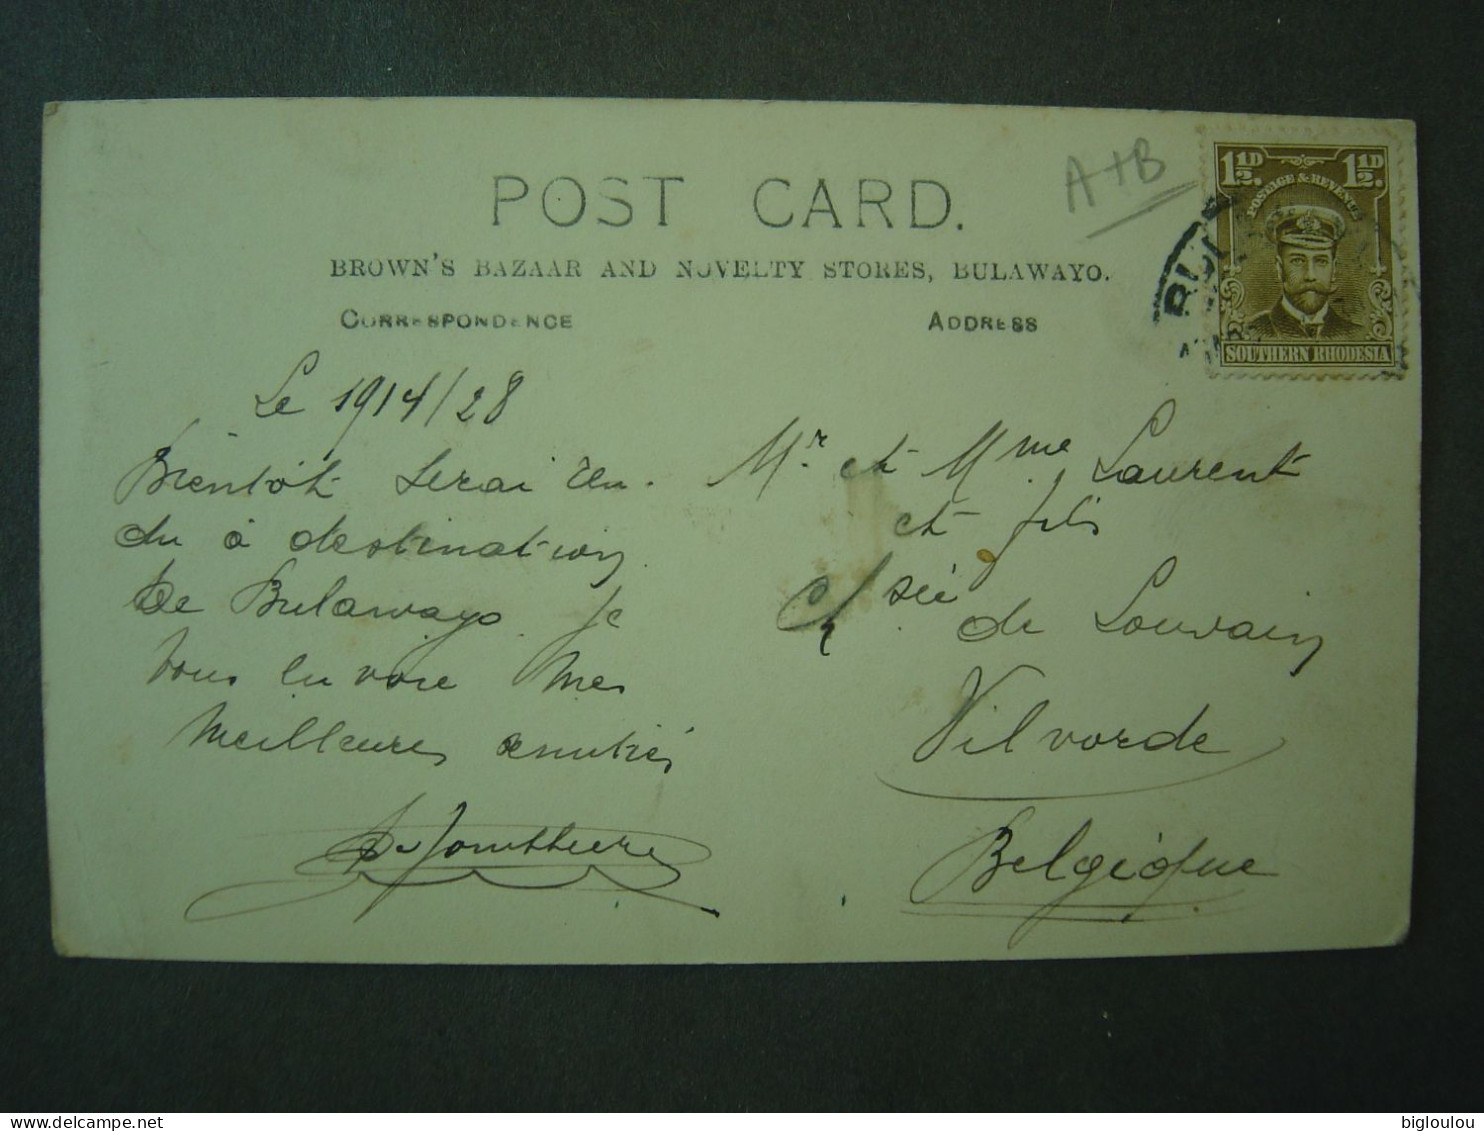 Zimbabwe - Bulawayo - Rhodes Staute - See Post Stamp - Vintage Postcard - Simbabwe